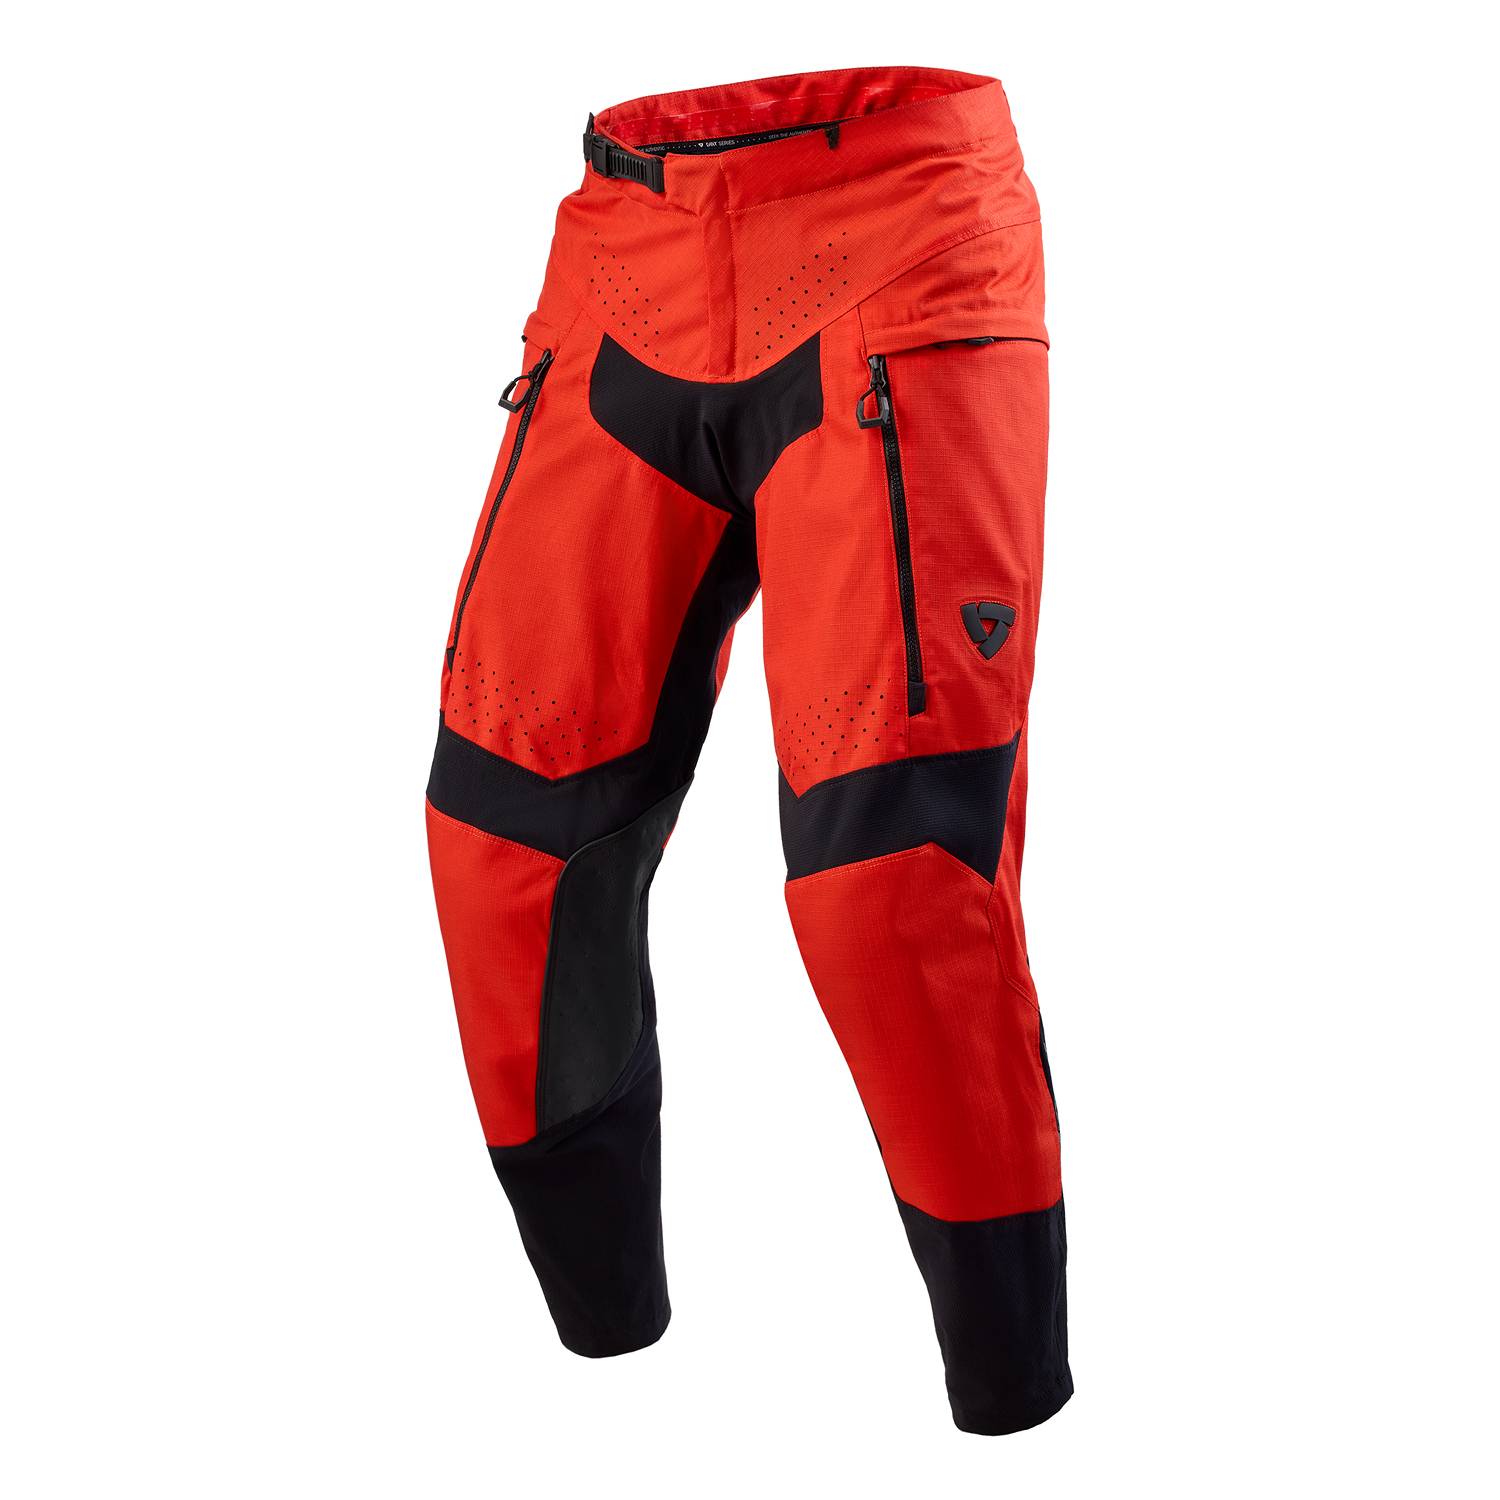 Image of REV'IT! Pants Peninsula Red Short Motorcycle Pants Größe M